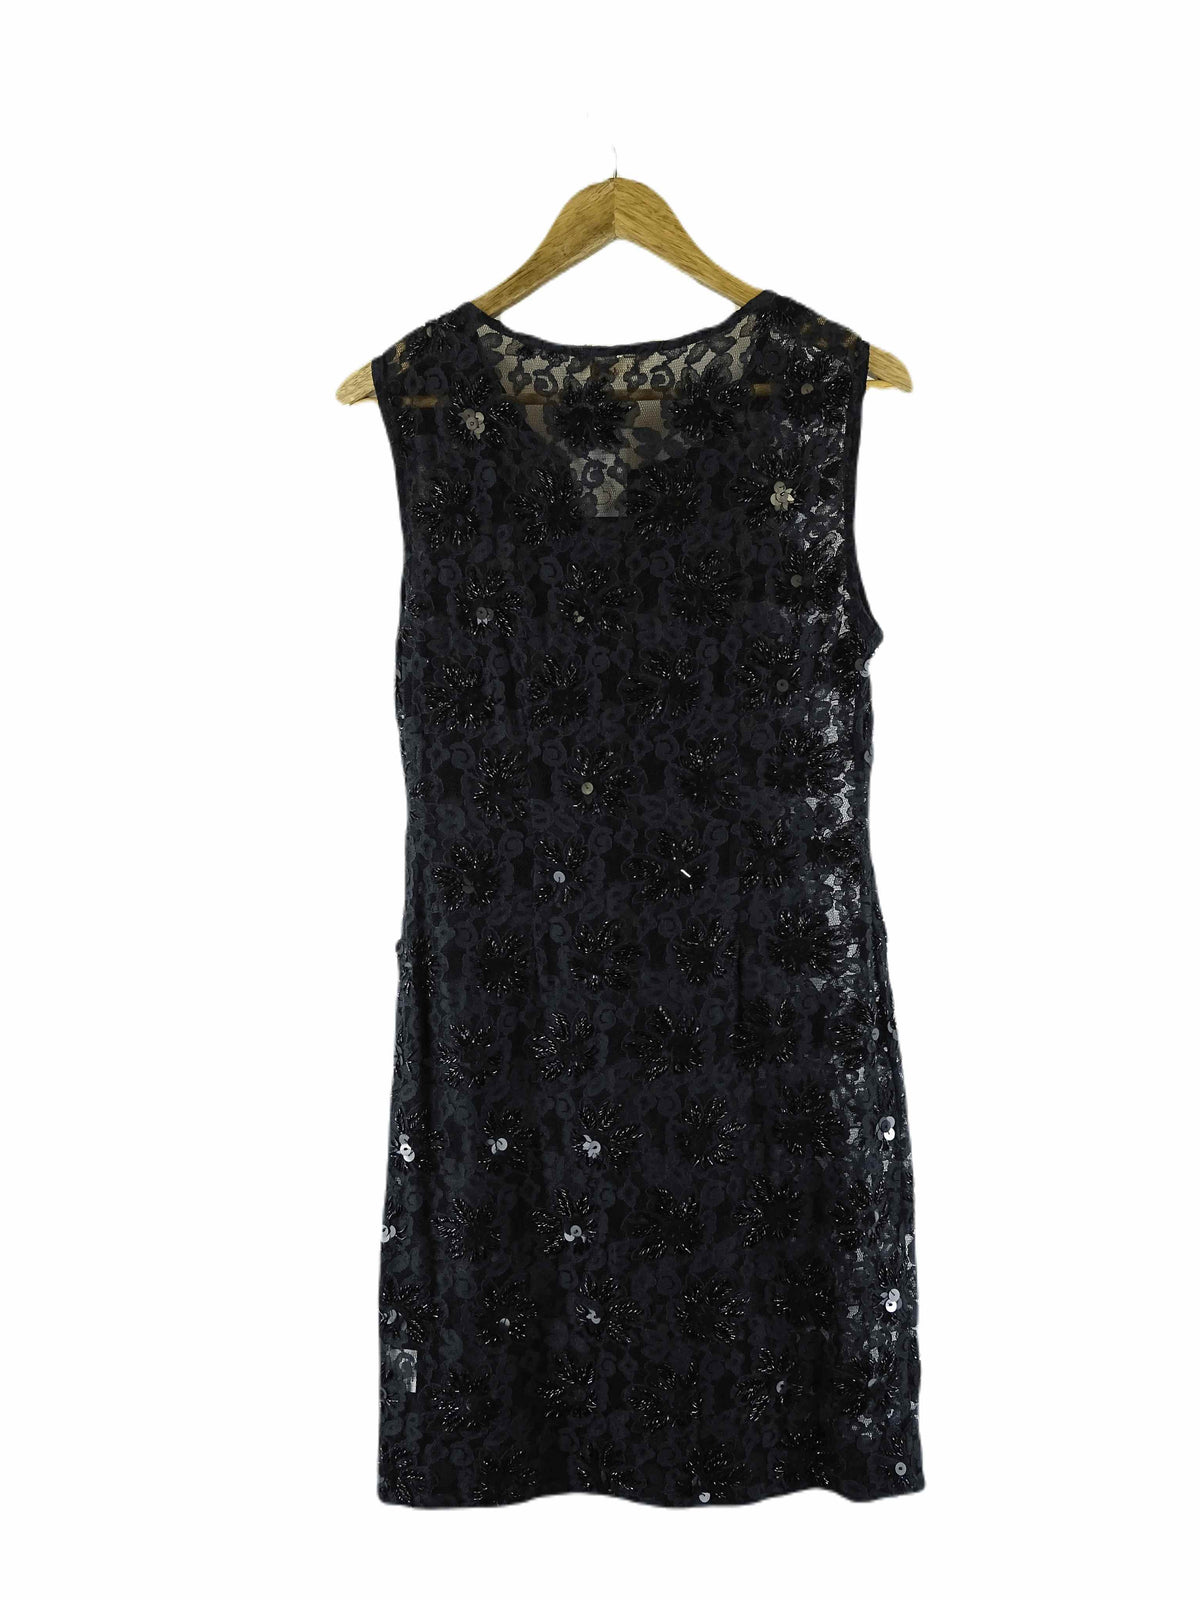 Alannah Hill Black Sequin Midi Dress 12